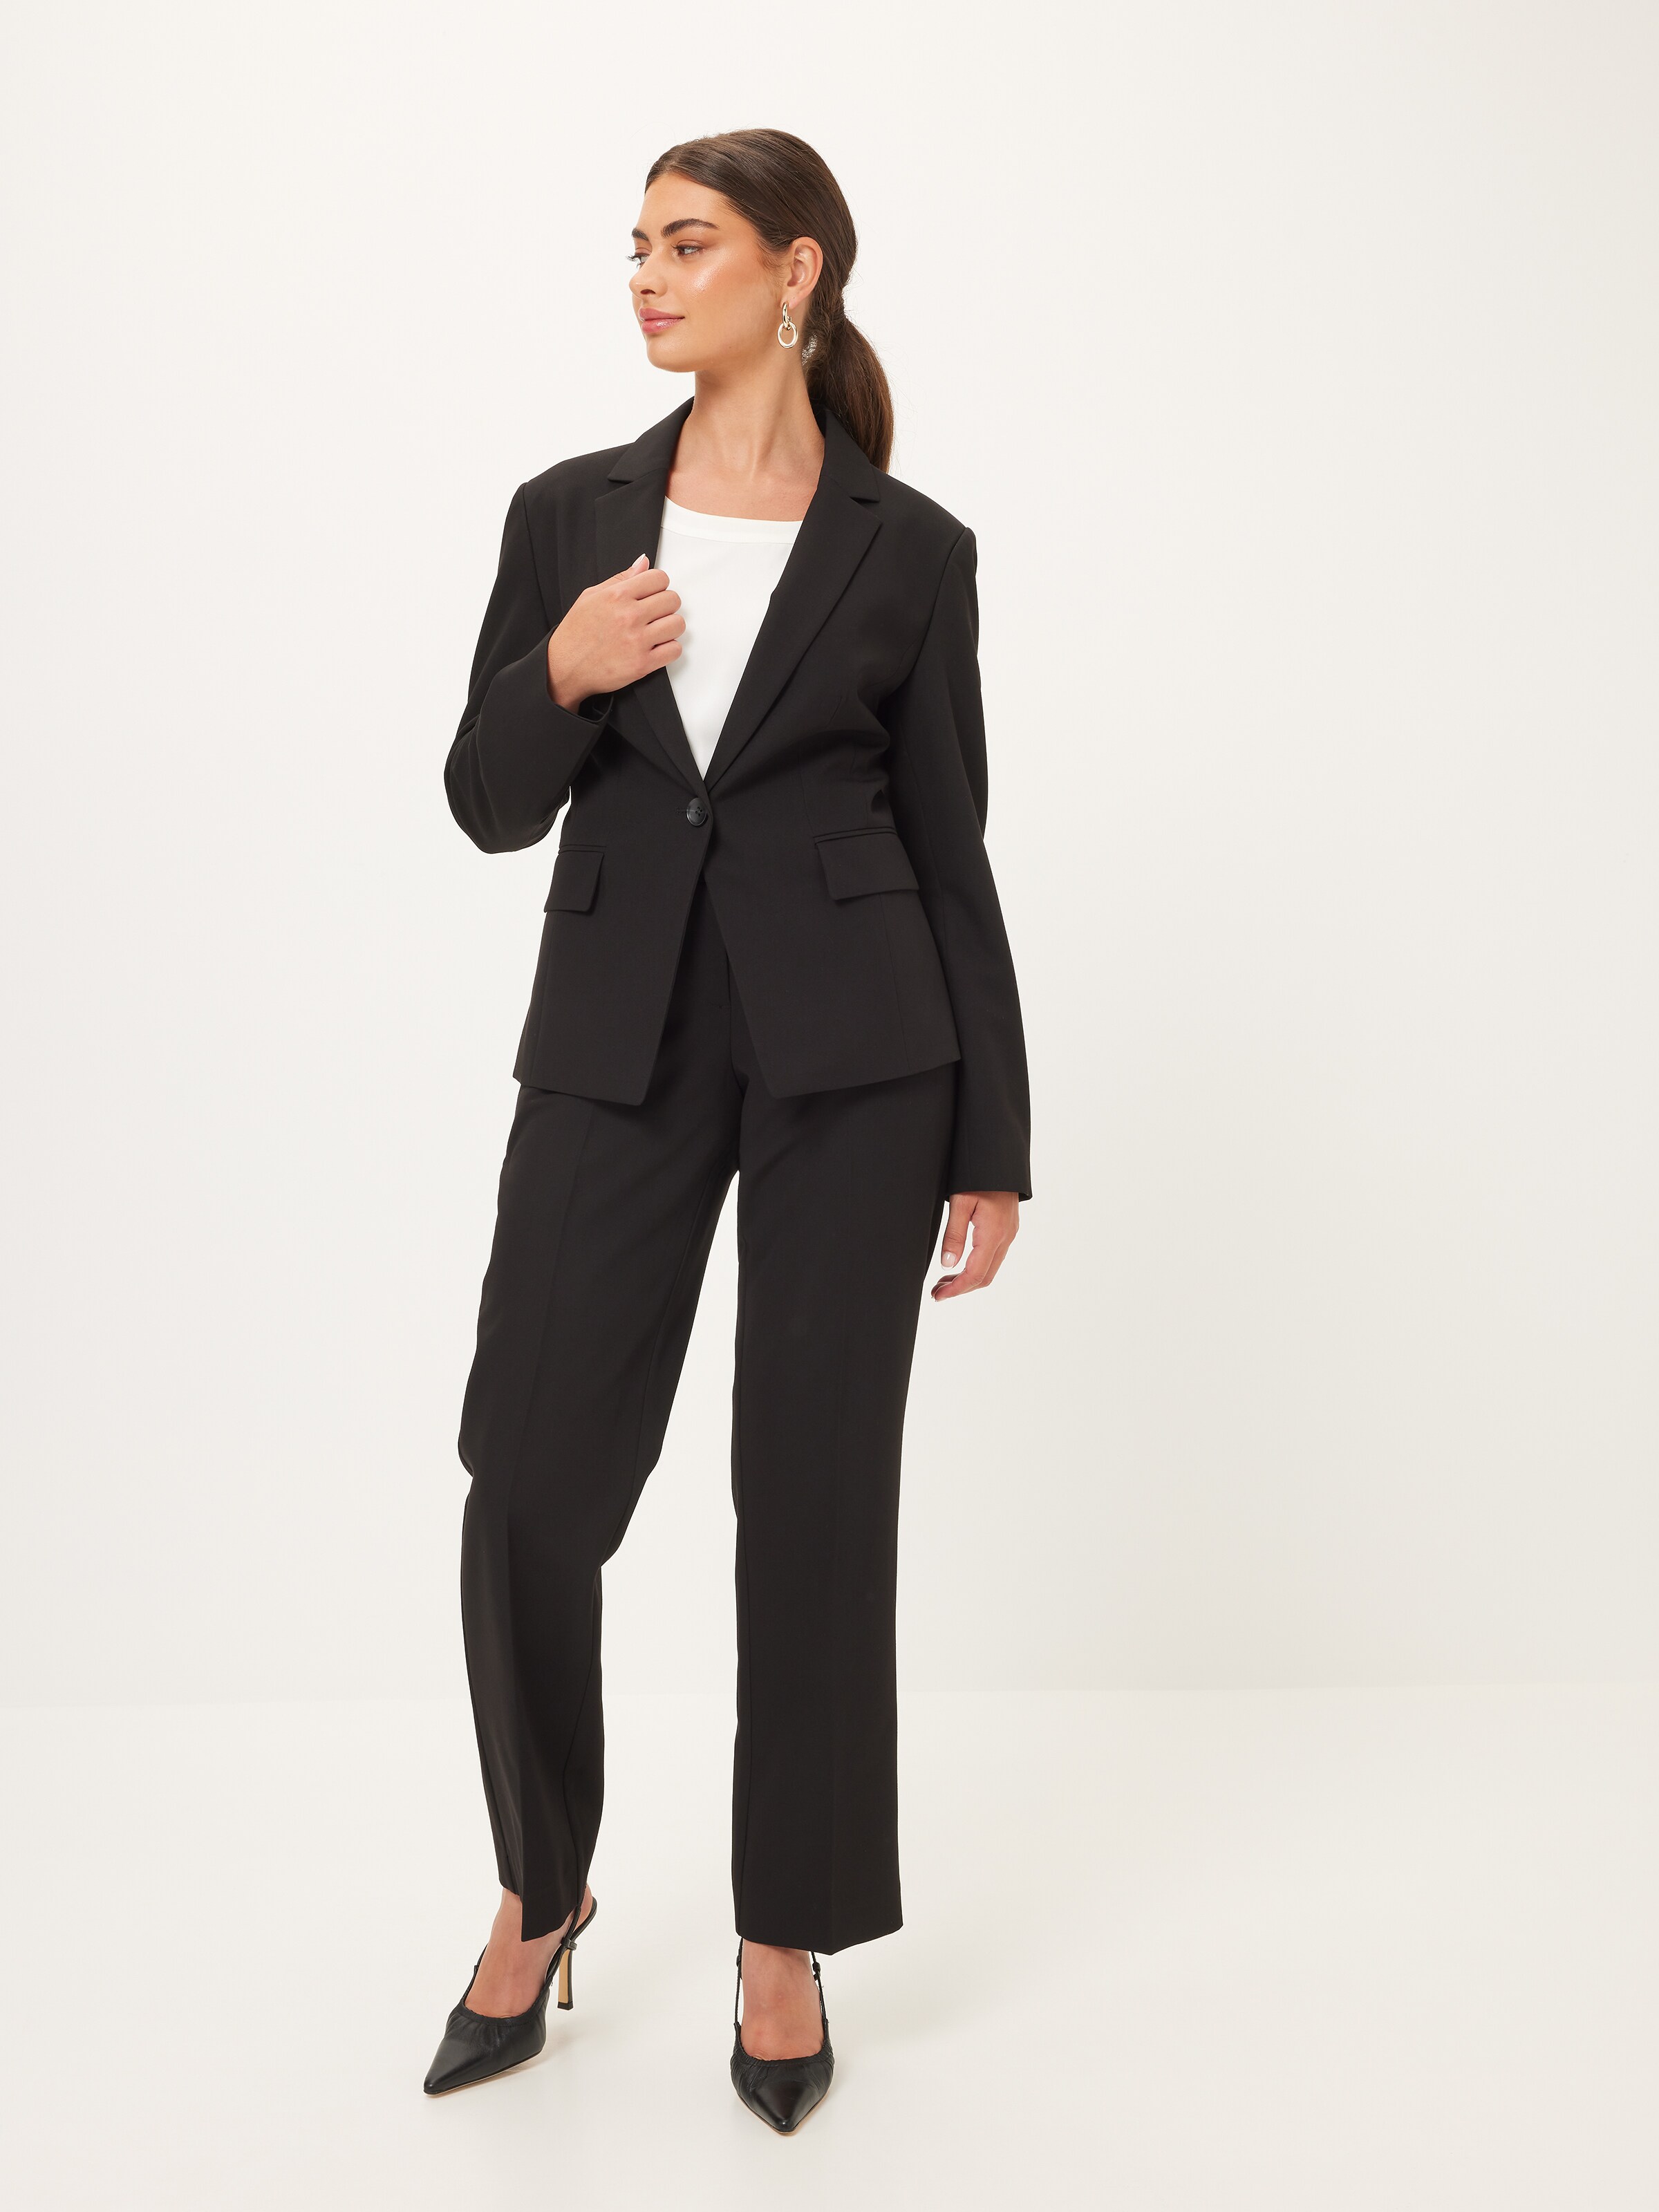 Women's Suits - Pant Suits for Women